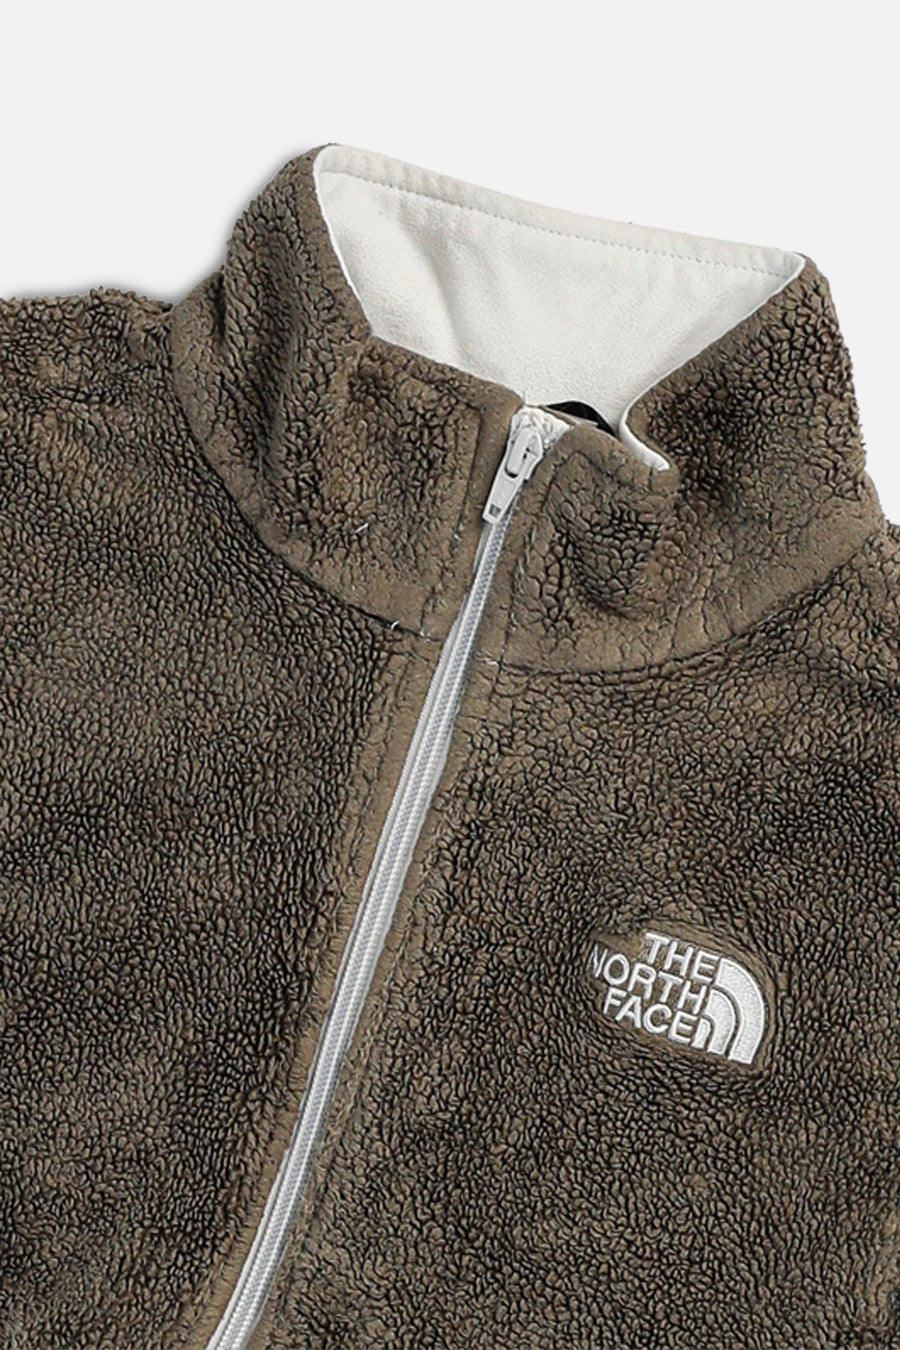 Rework North Face Crop Fleece Jacket - XS